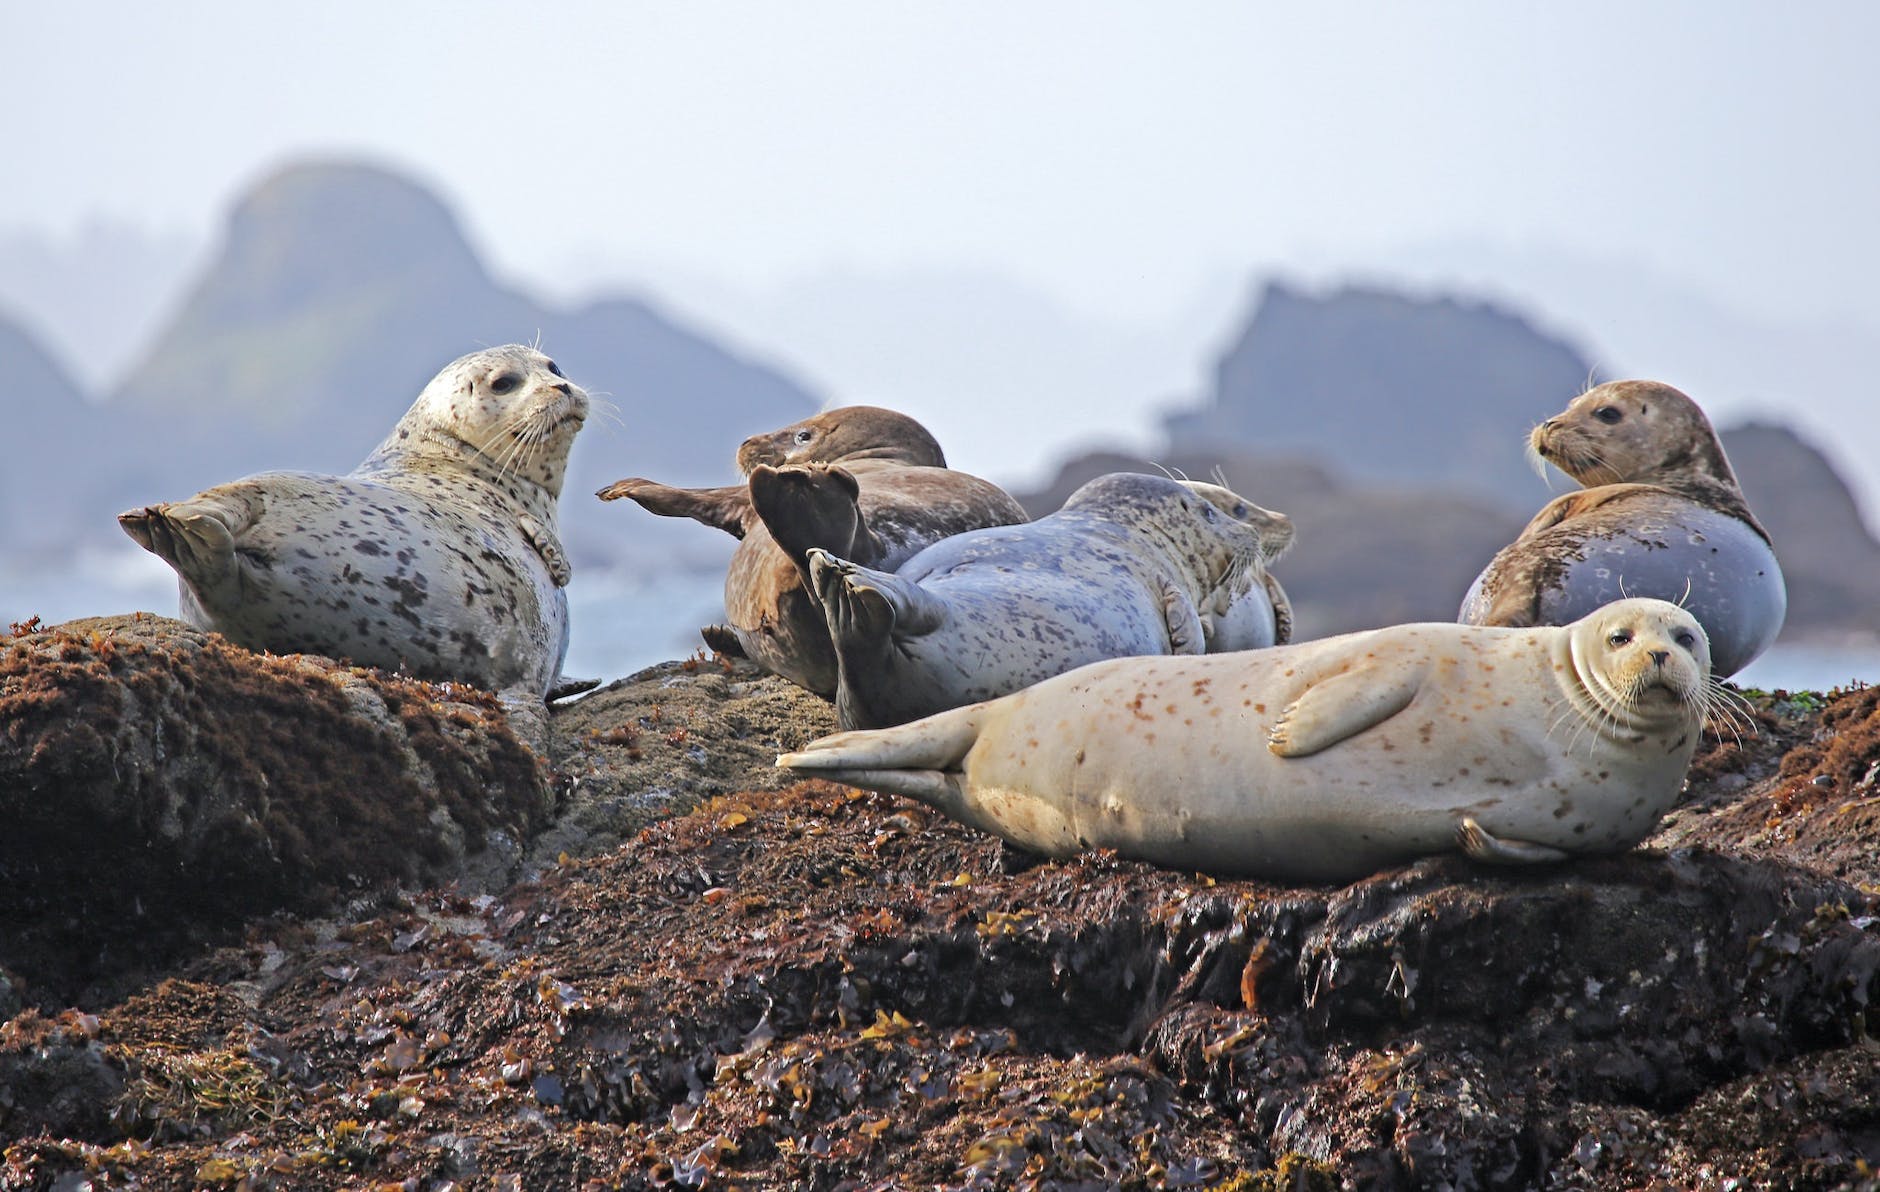 A Natural Rhythmic Aptitude Develops in Newborn Seals